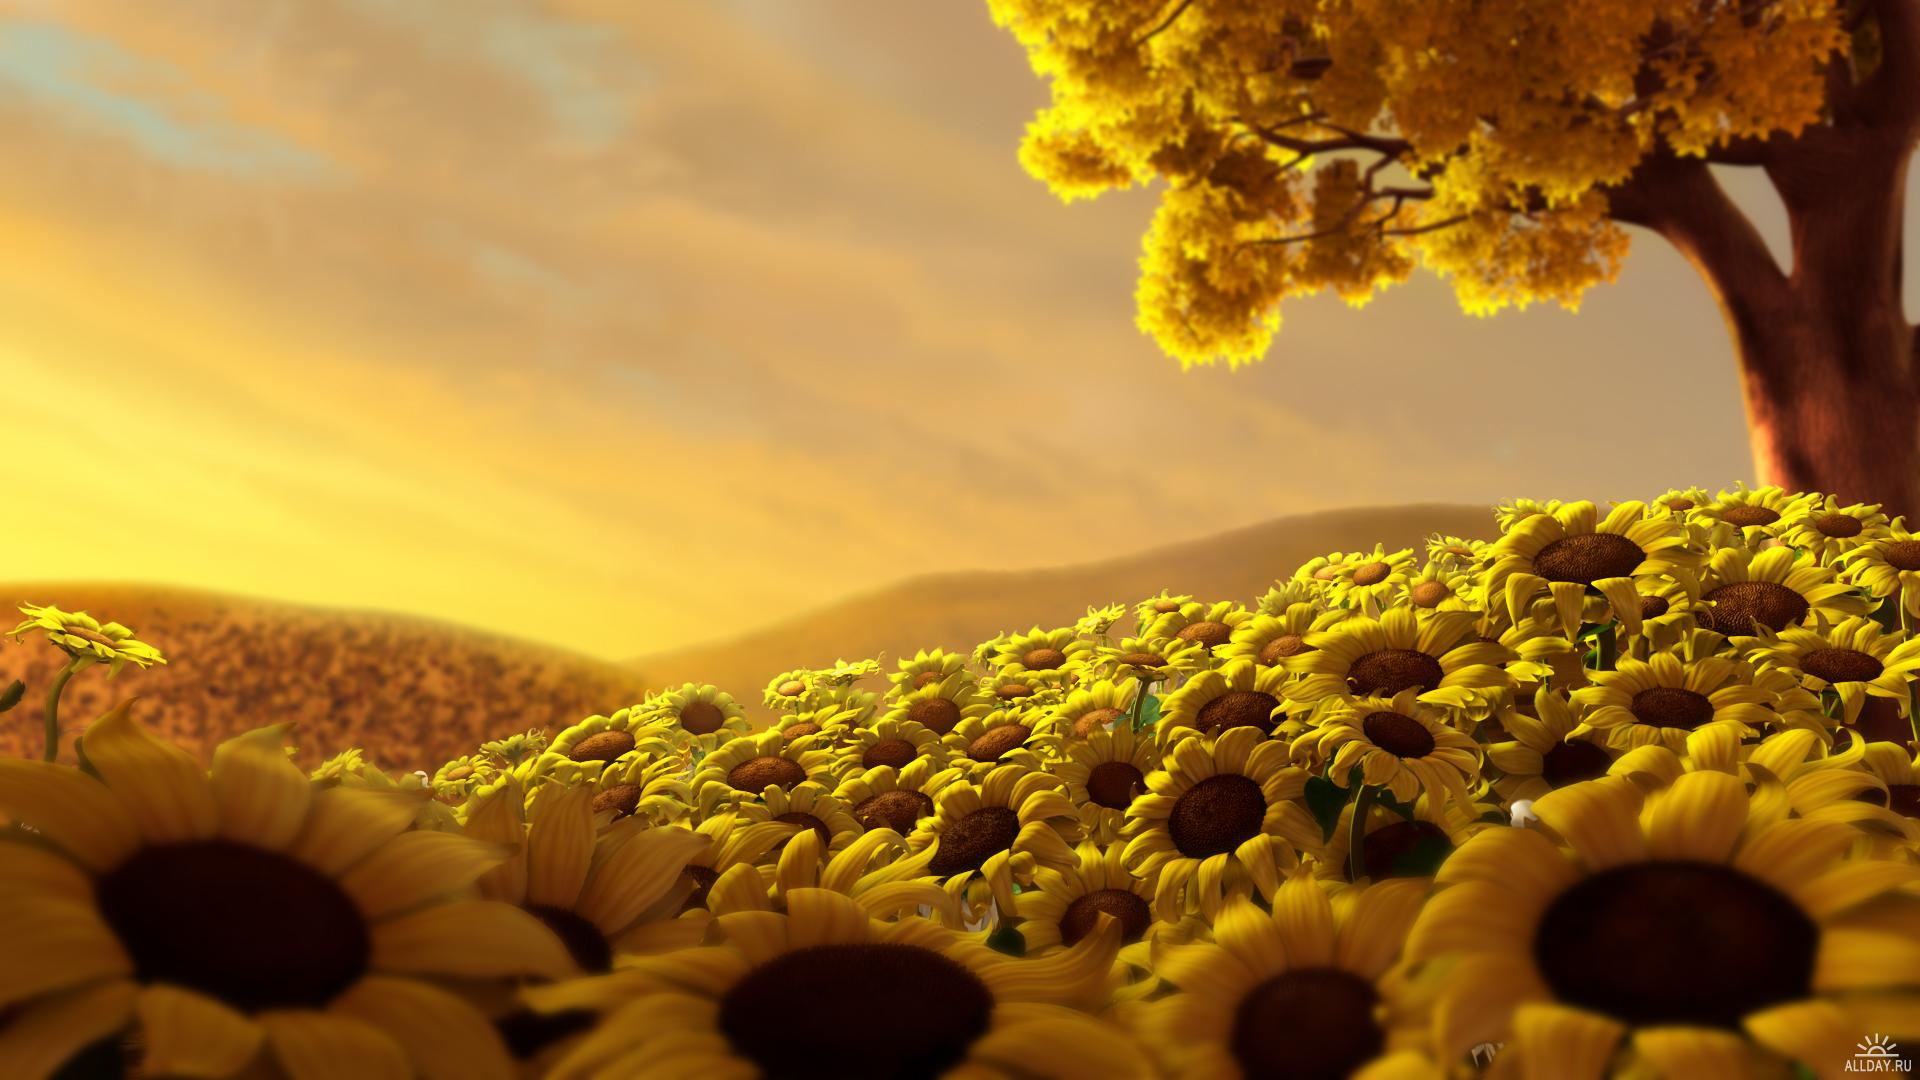 🔥 Download Yellow Beauty Nature Wallpaper HD Photo by @amandah27 | The